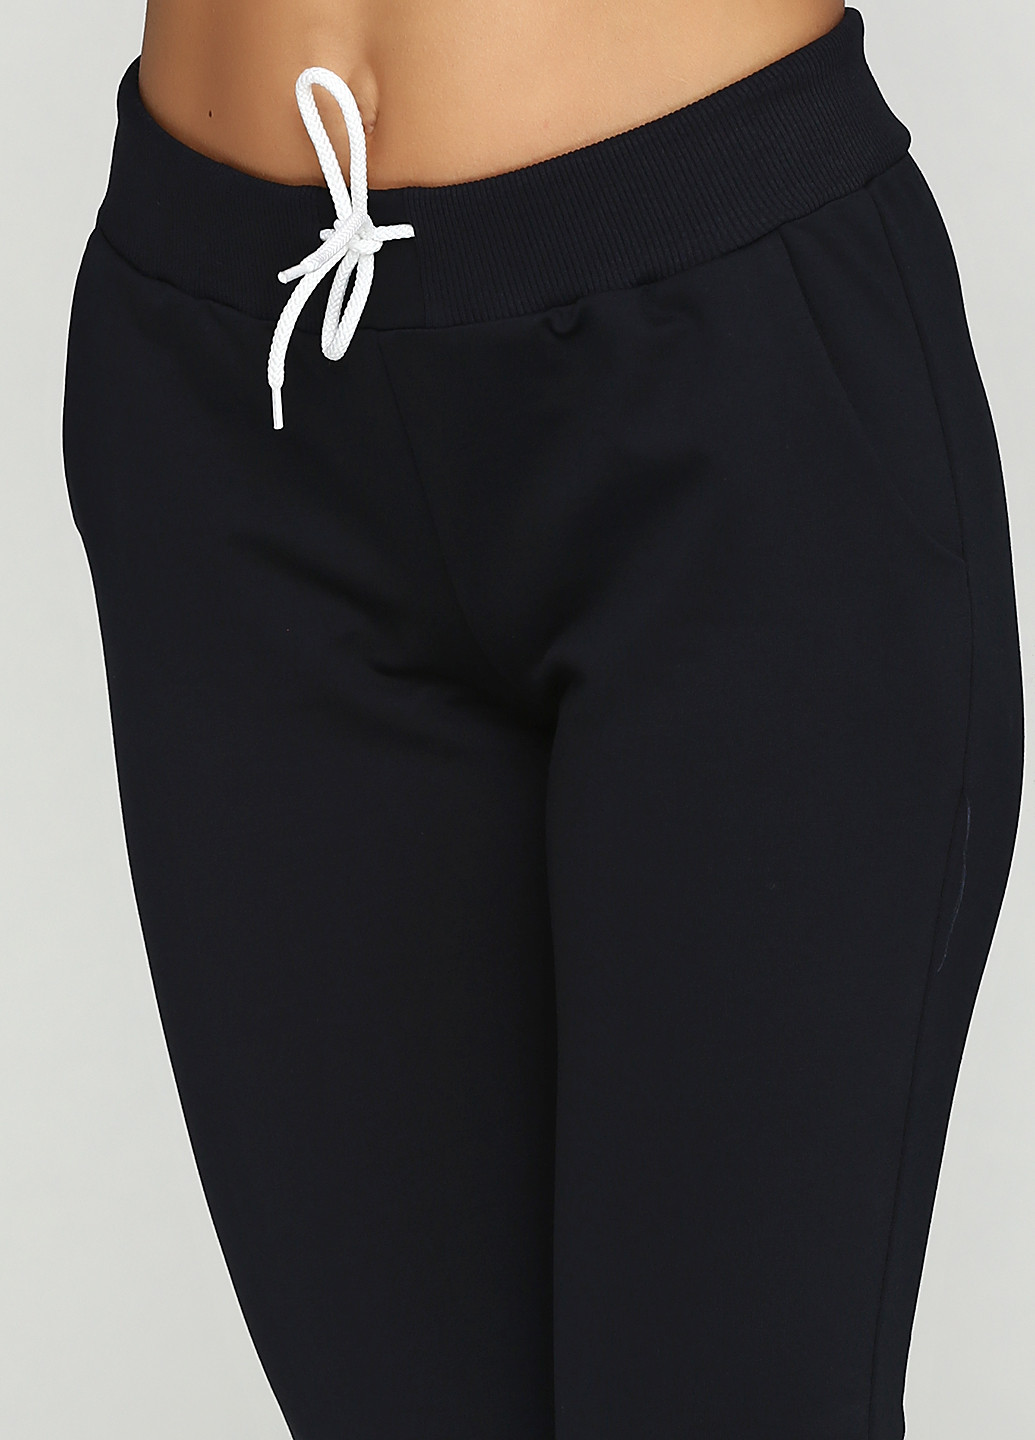 Костюм (толстовка, брюки) Ballet Grace брючный логотип тёмно-синий спортивный